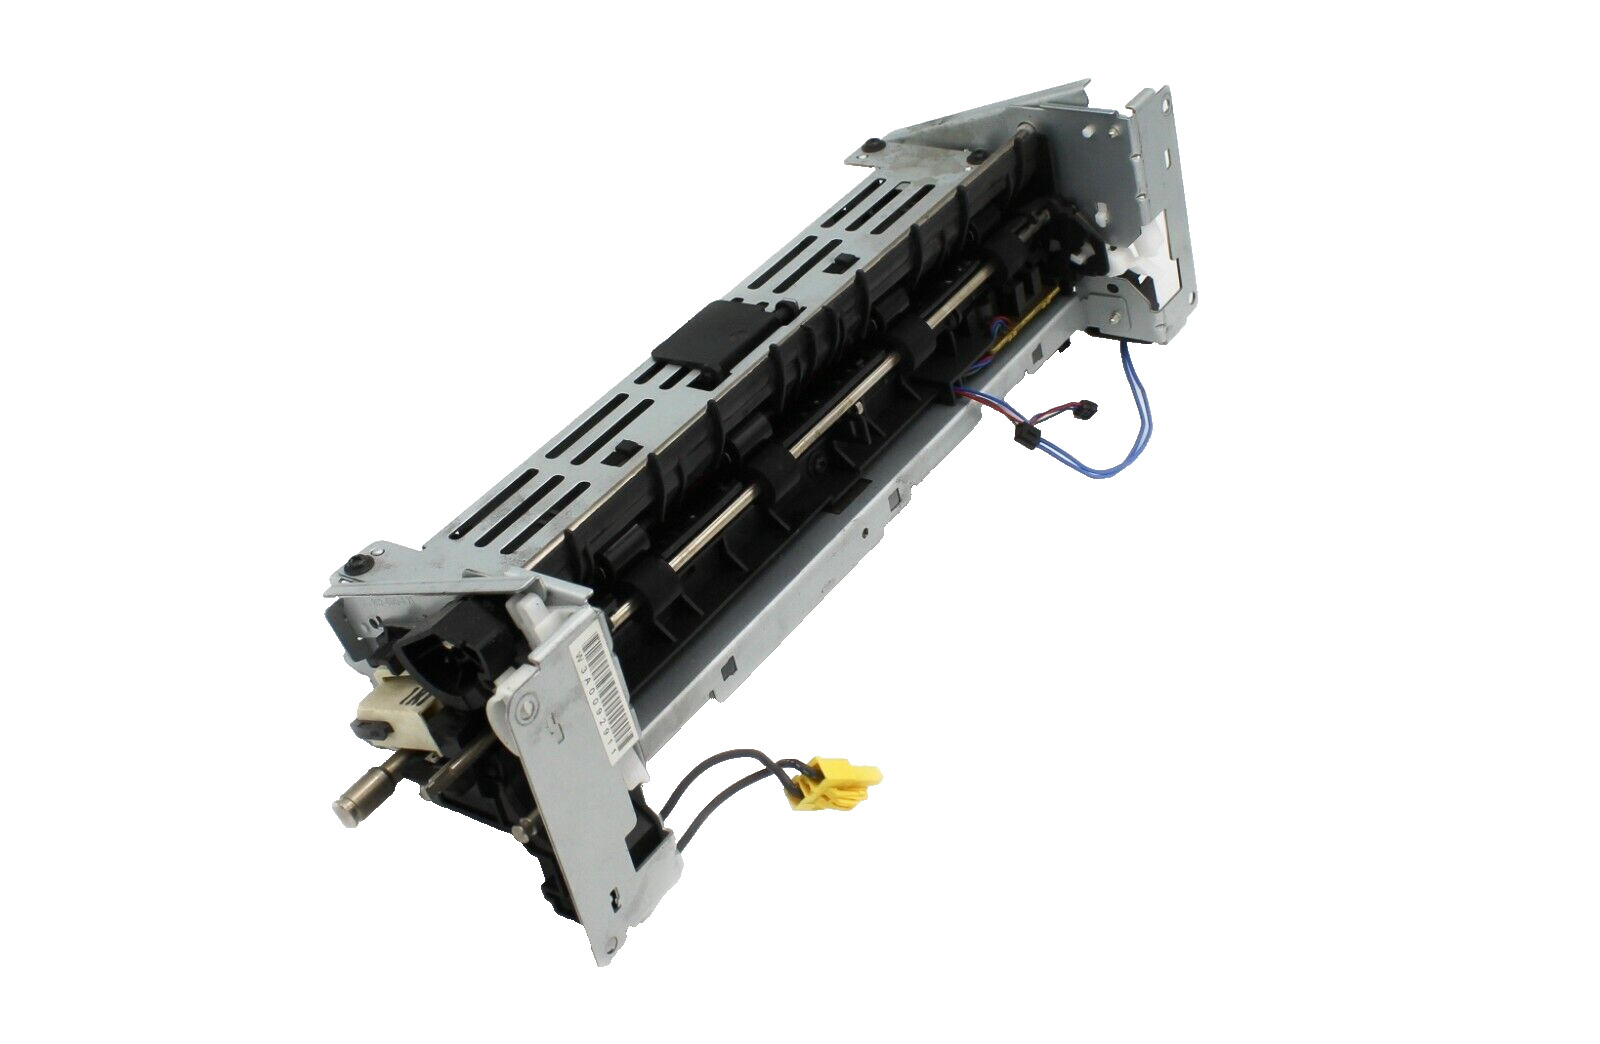 RM1-6405 HP LaserJet P2035/P2055 Fuser Assembly 110V